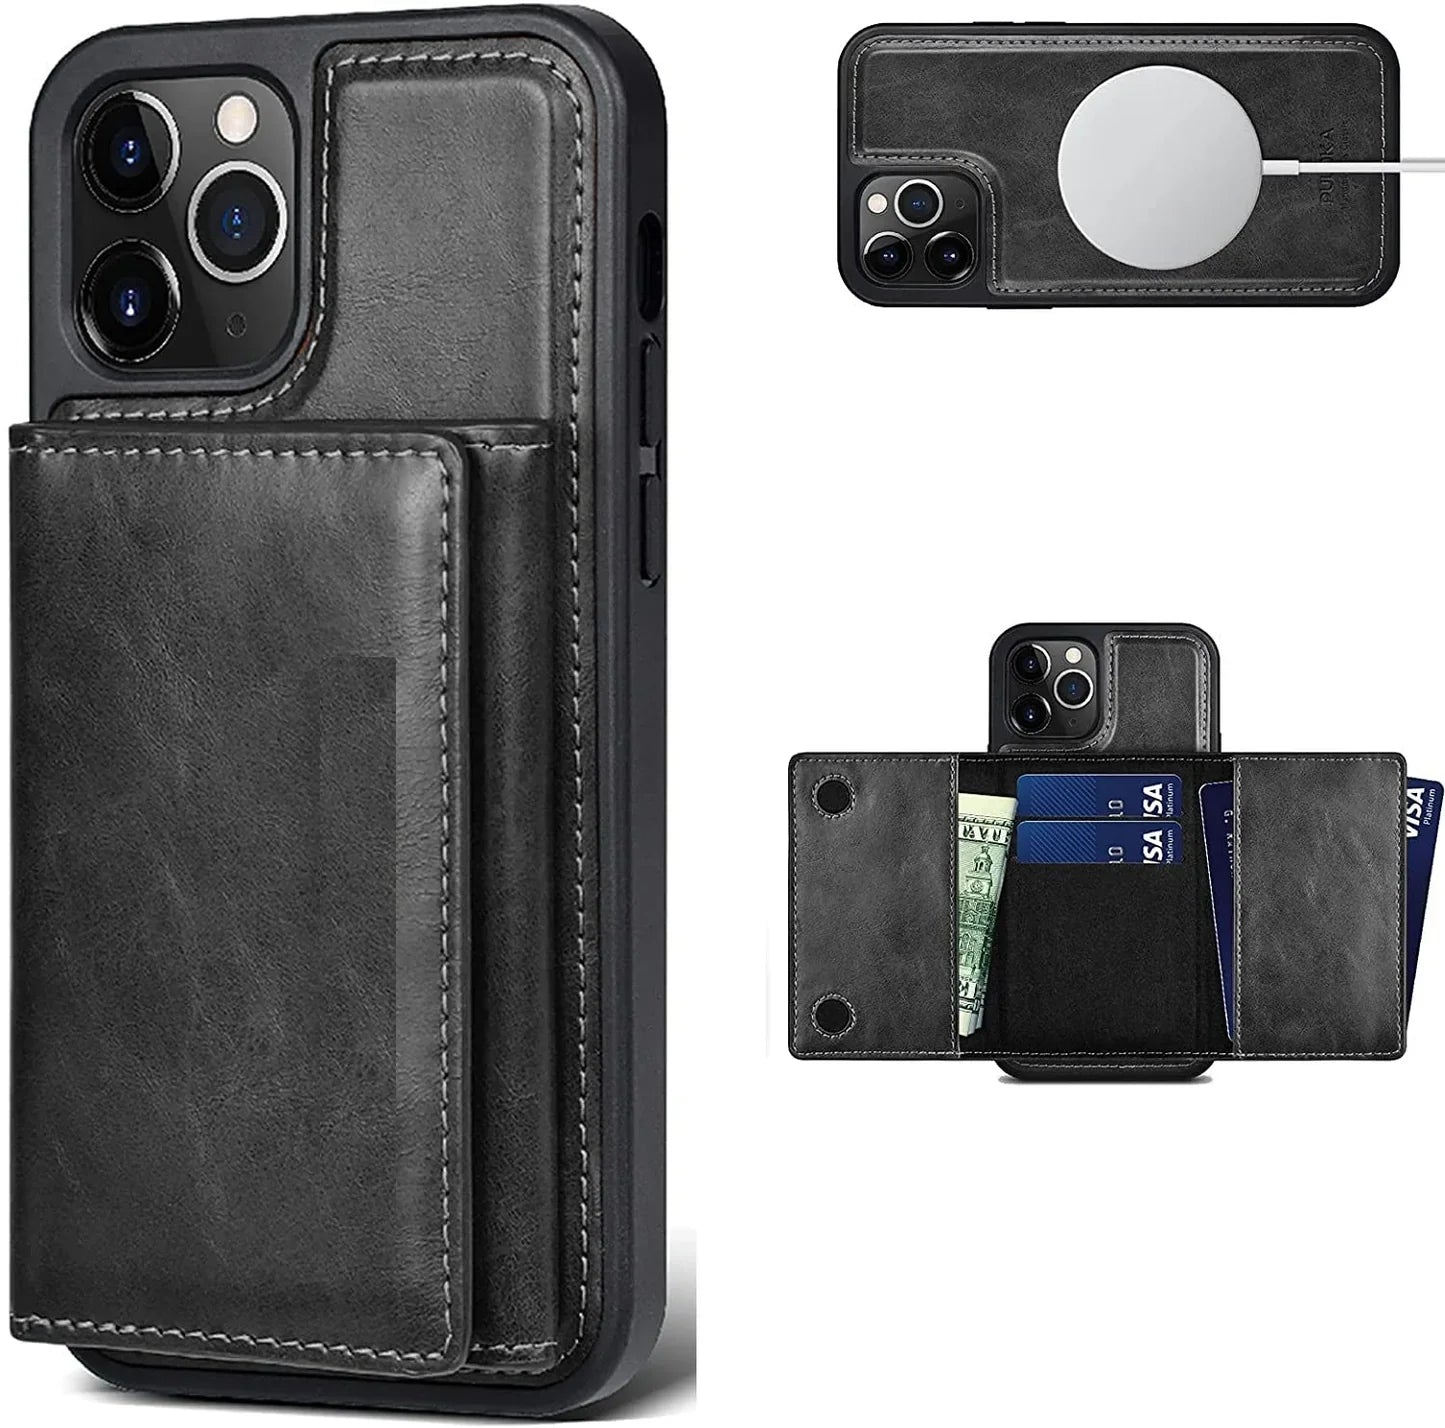 iPhone 13 Pro Premium Quality New Design Wallet Leather case